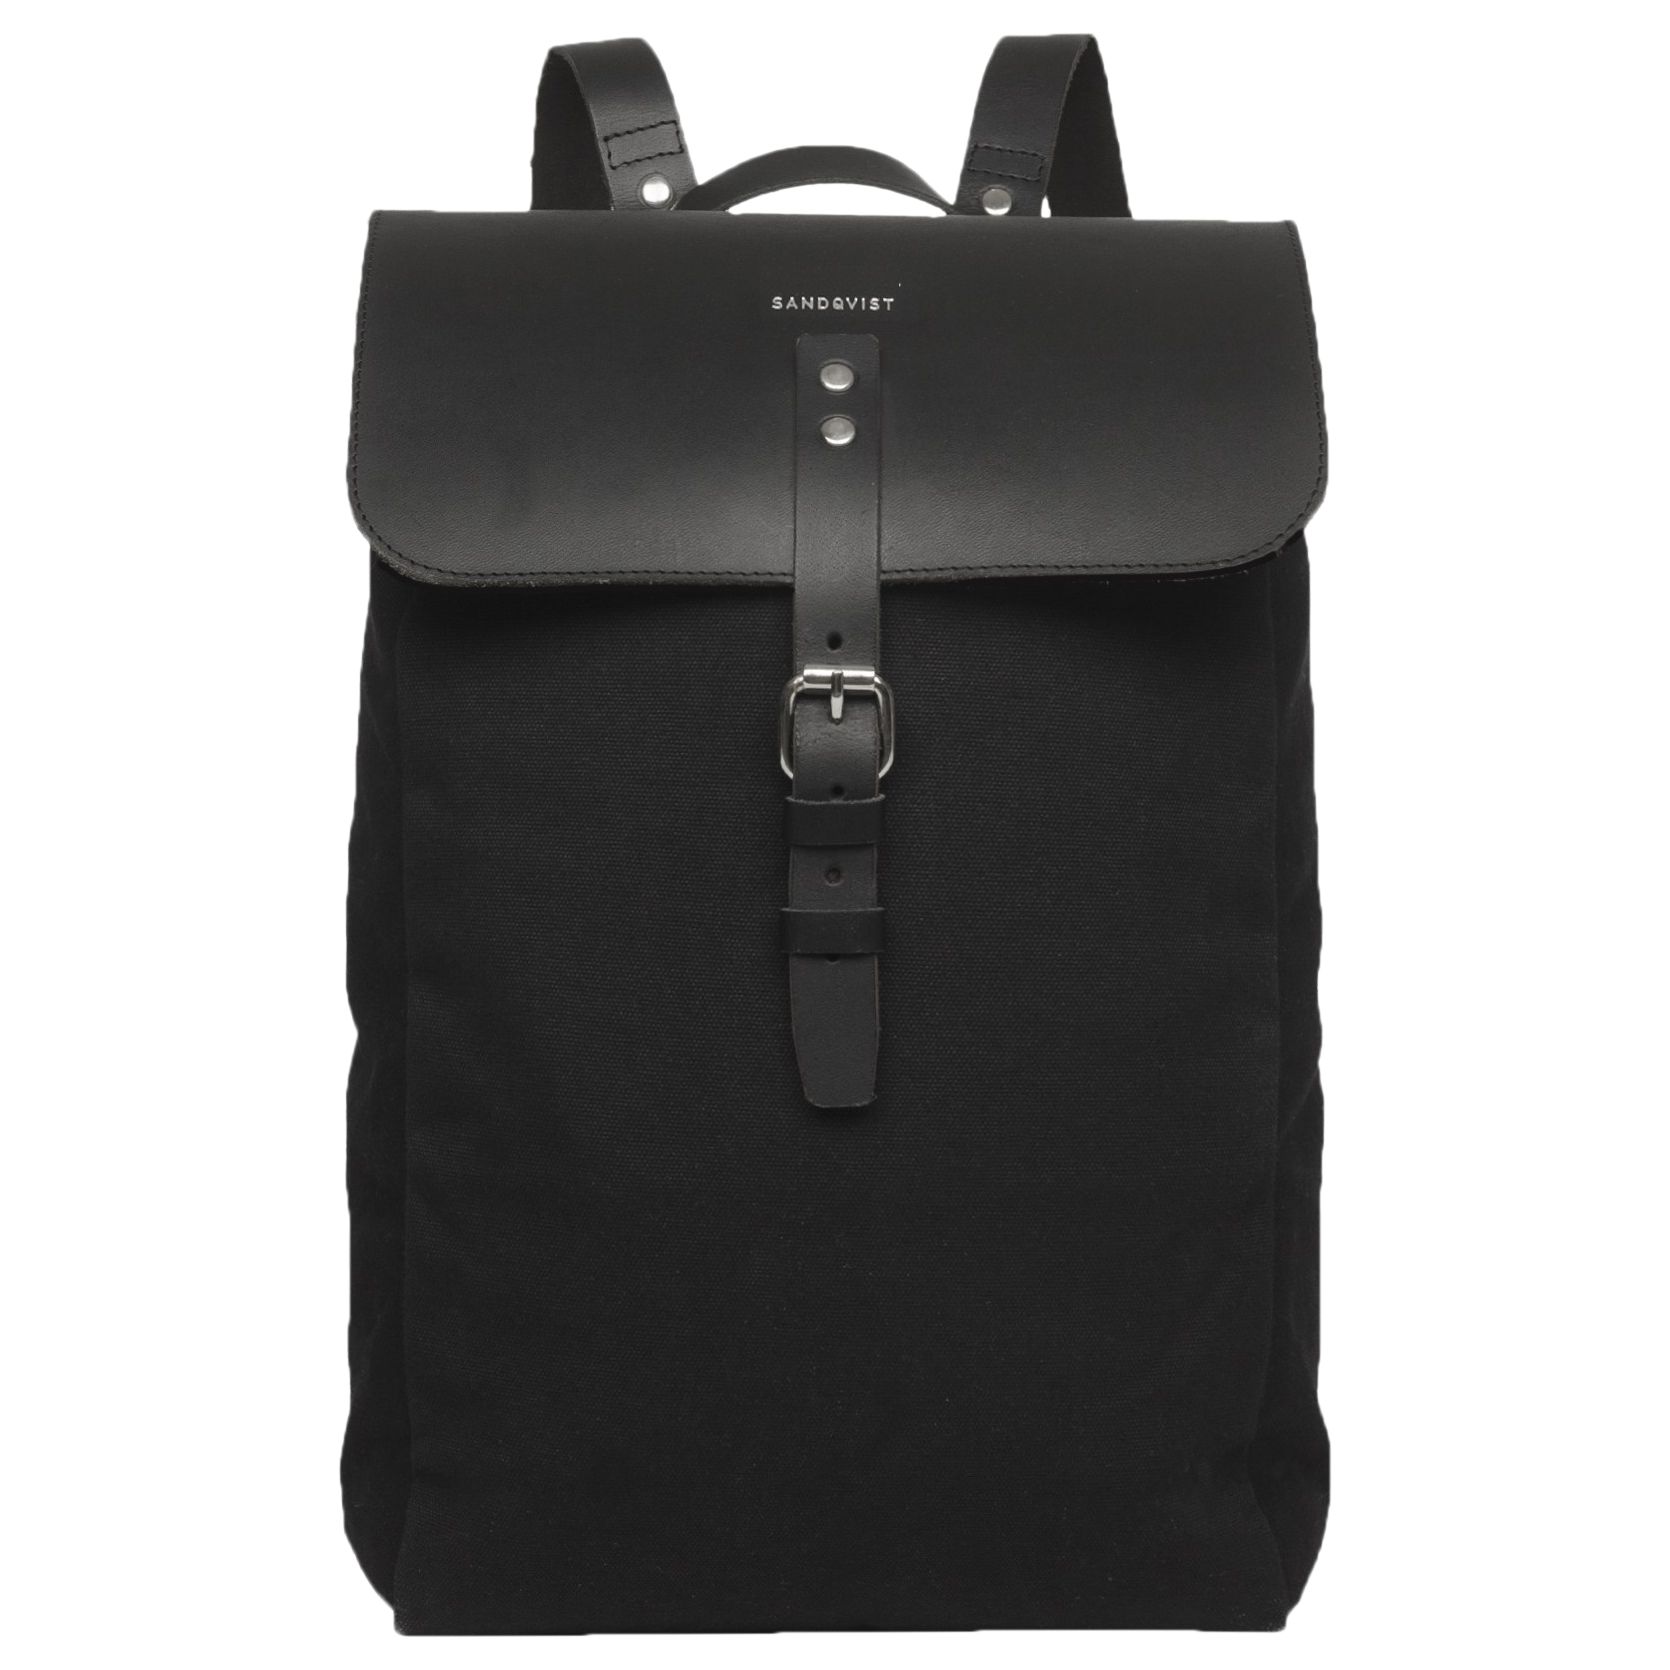 Sandqvist Backpacks | Suitcases, Bags & Accessories | Lewis